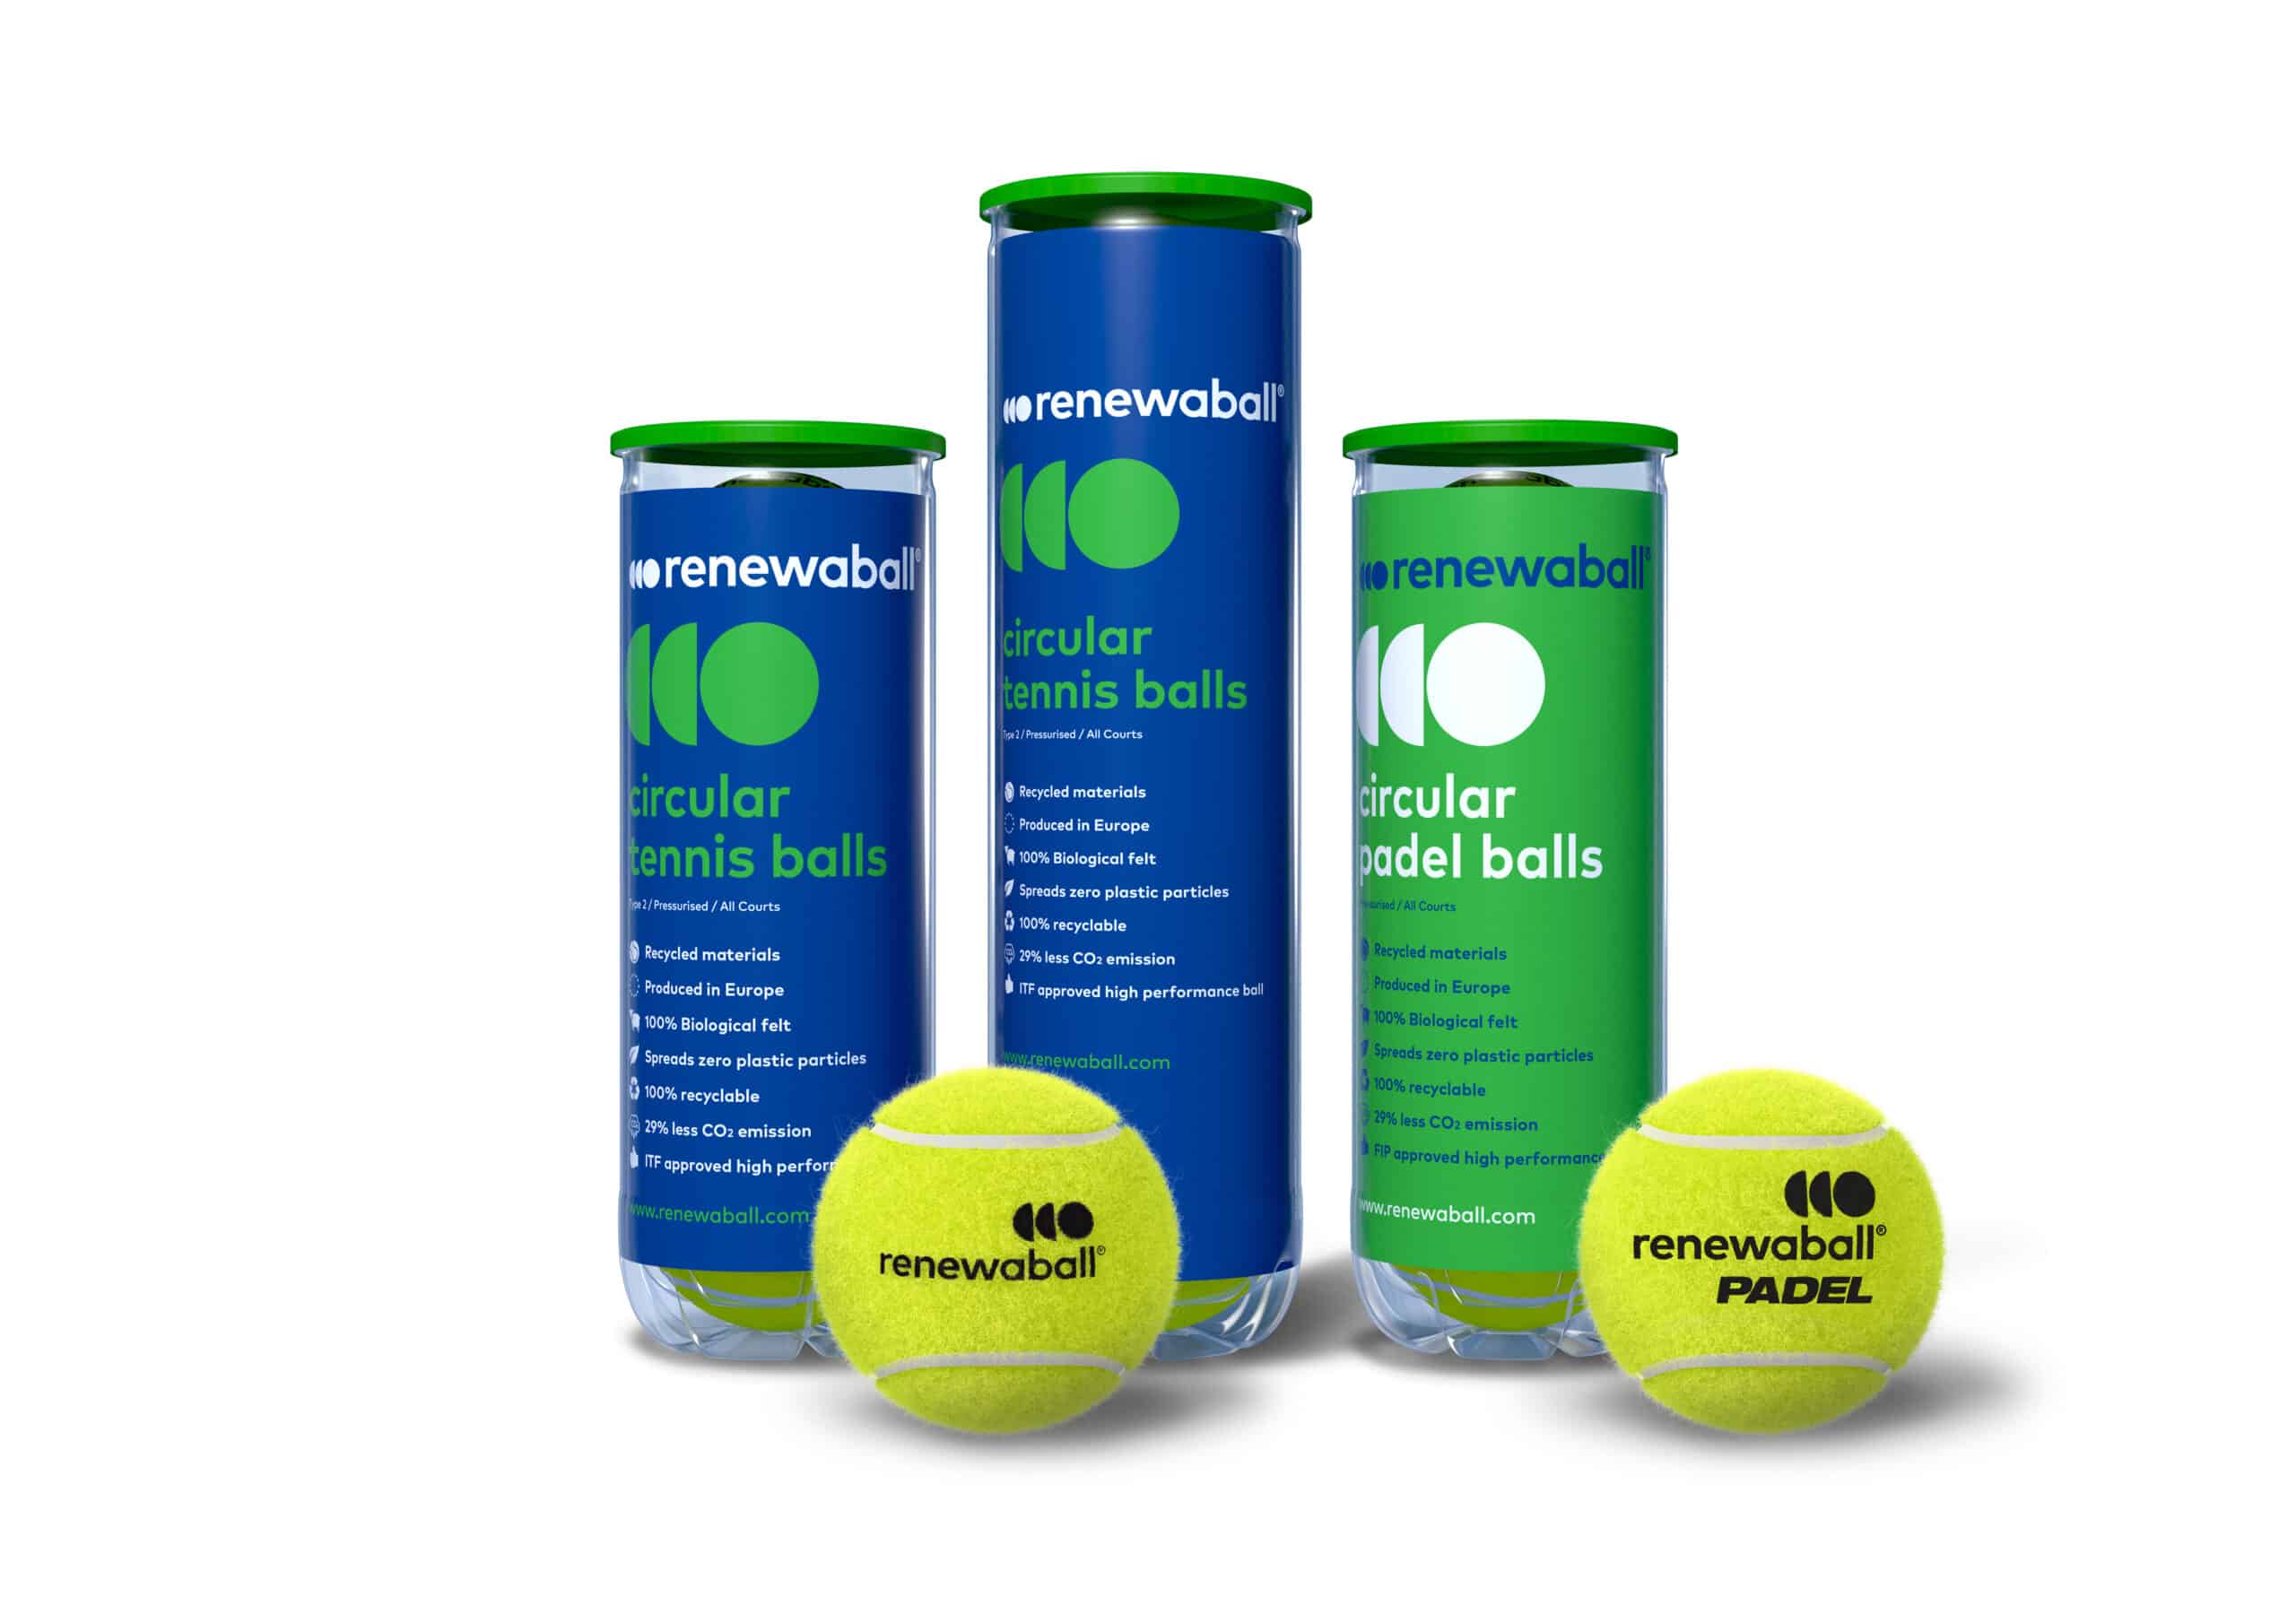 Renewaball makes the world's first circular tennis and padel ball 